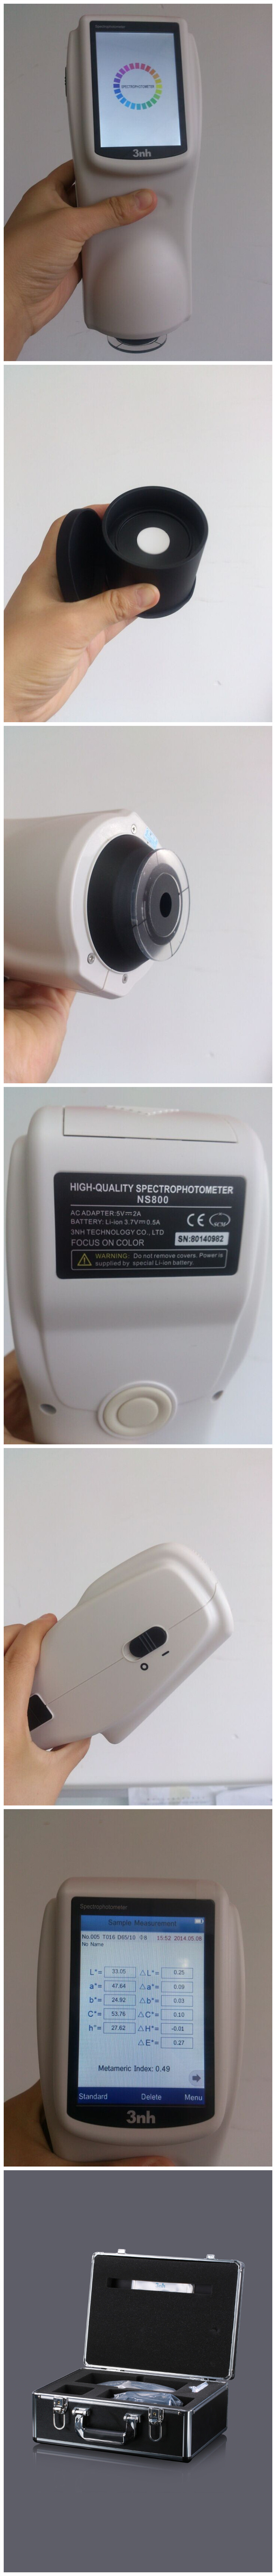 NS800 color spectrophotometer detail